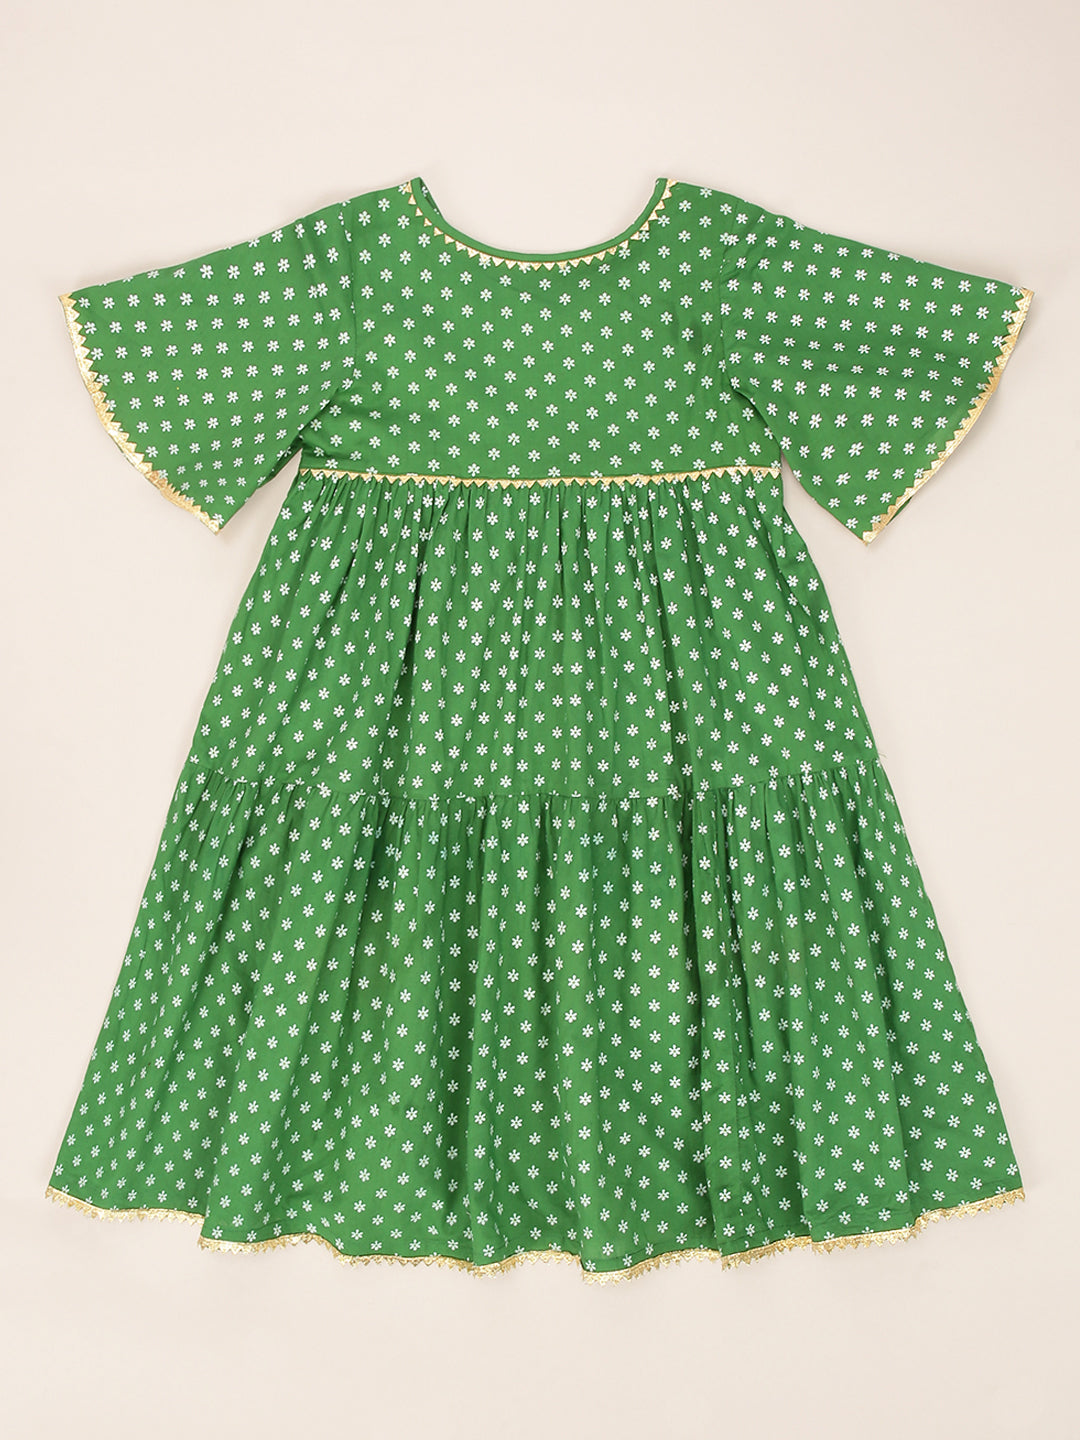 Girls Cotton Green Dress - 4 yrs to 12 yrs - Back